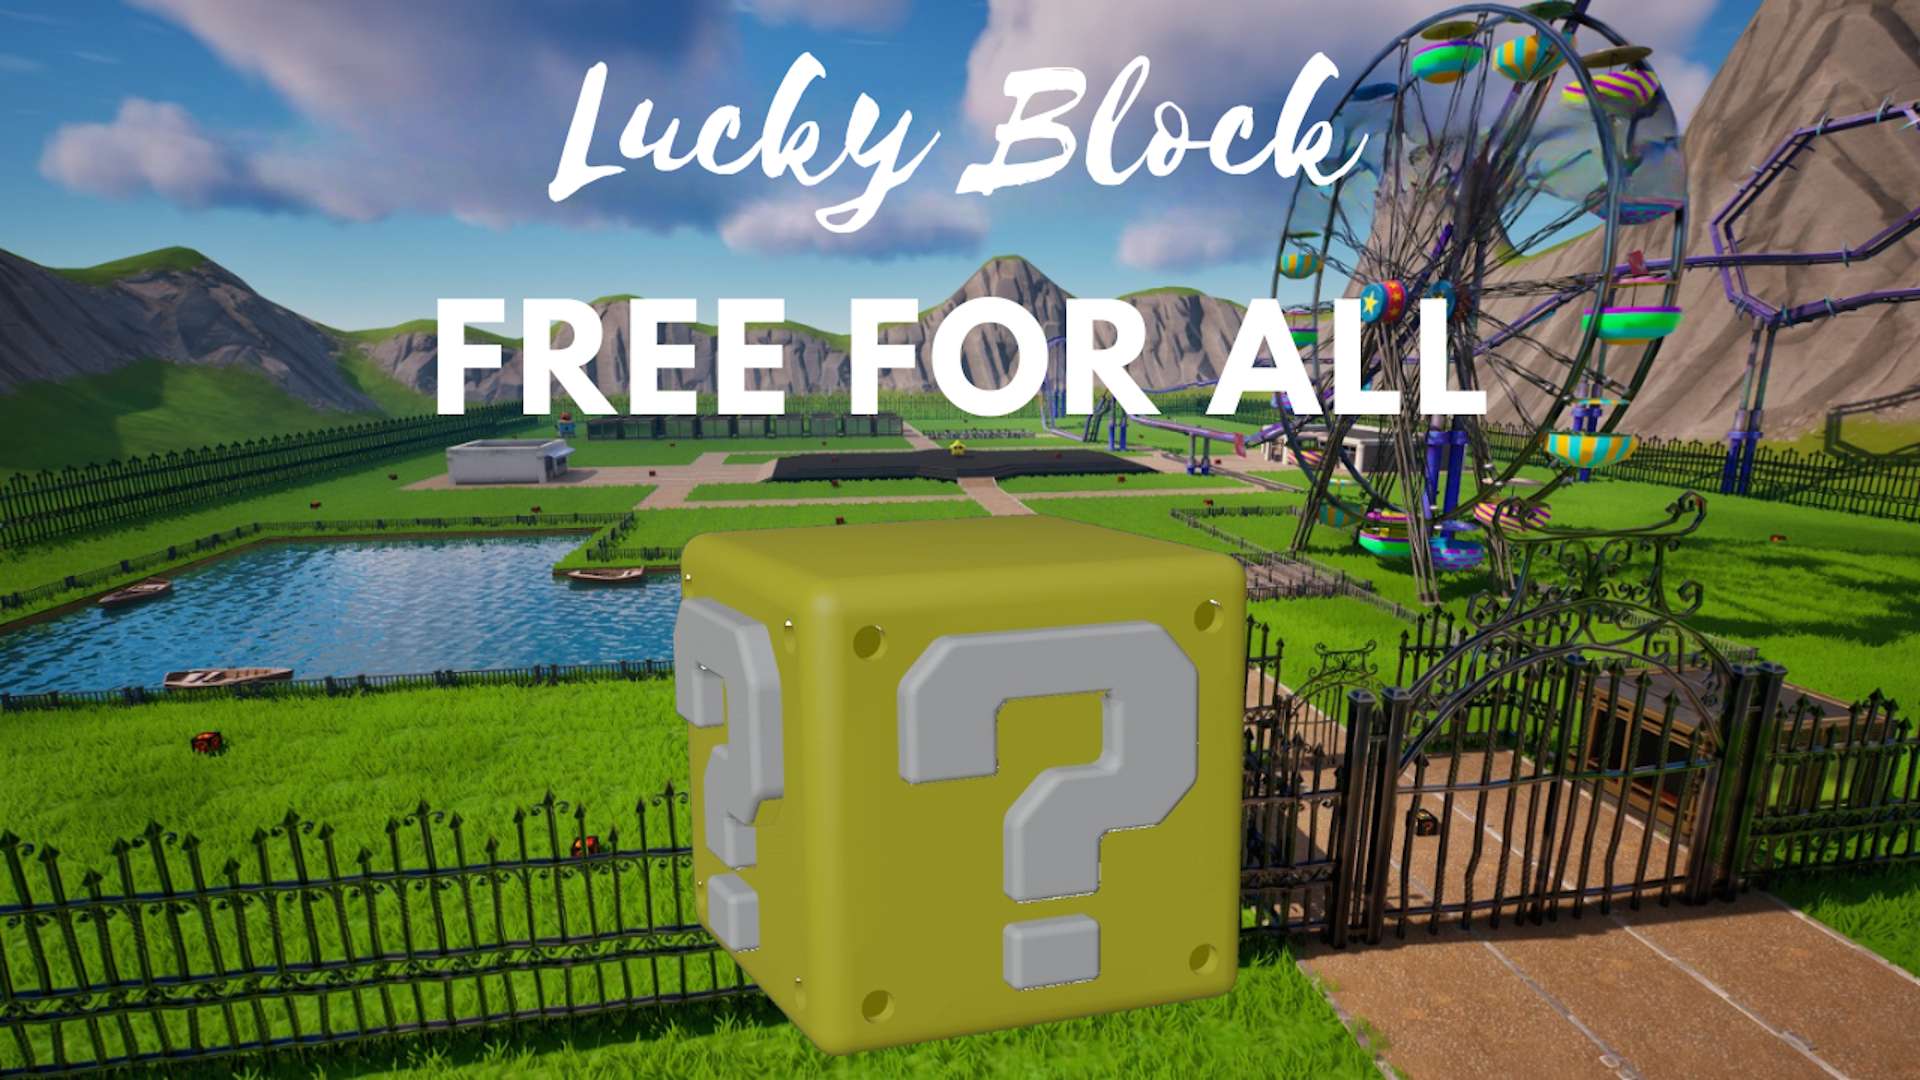 Lucky Blocks-FFA 2454-2253-6094 by fav - Fortnite Creative Map Code 